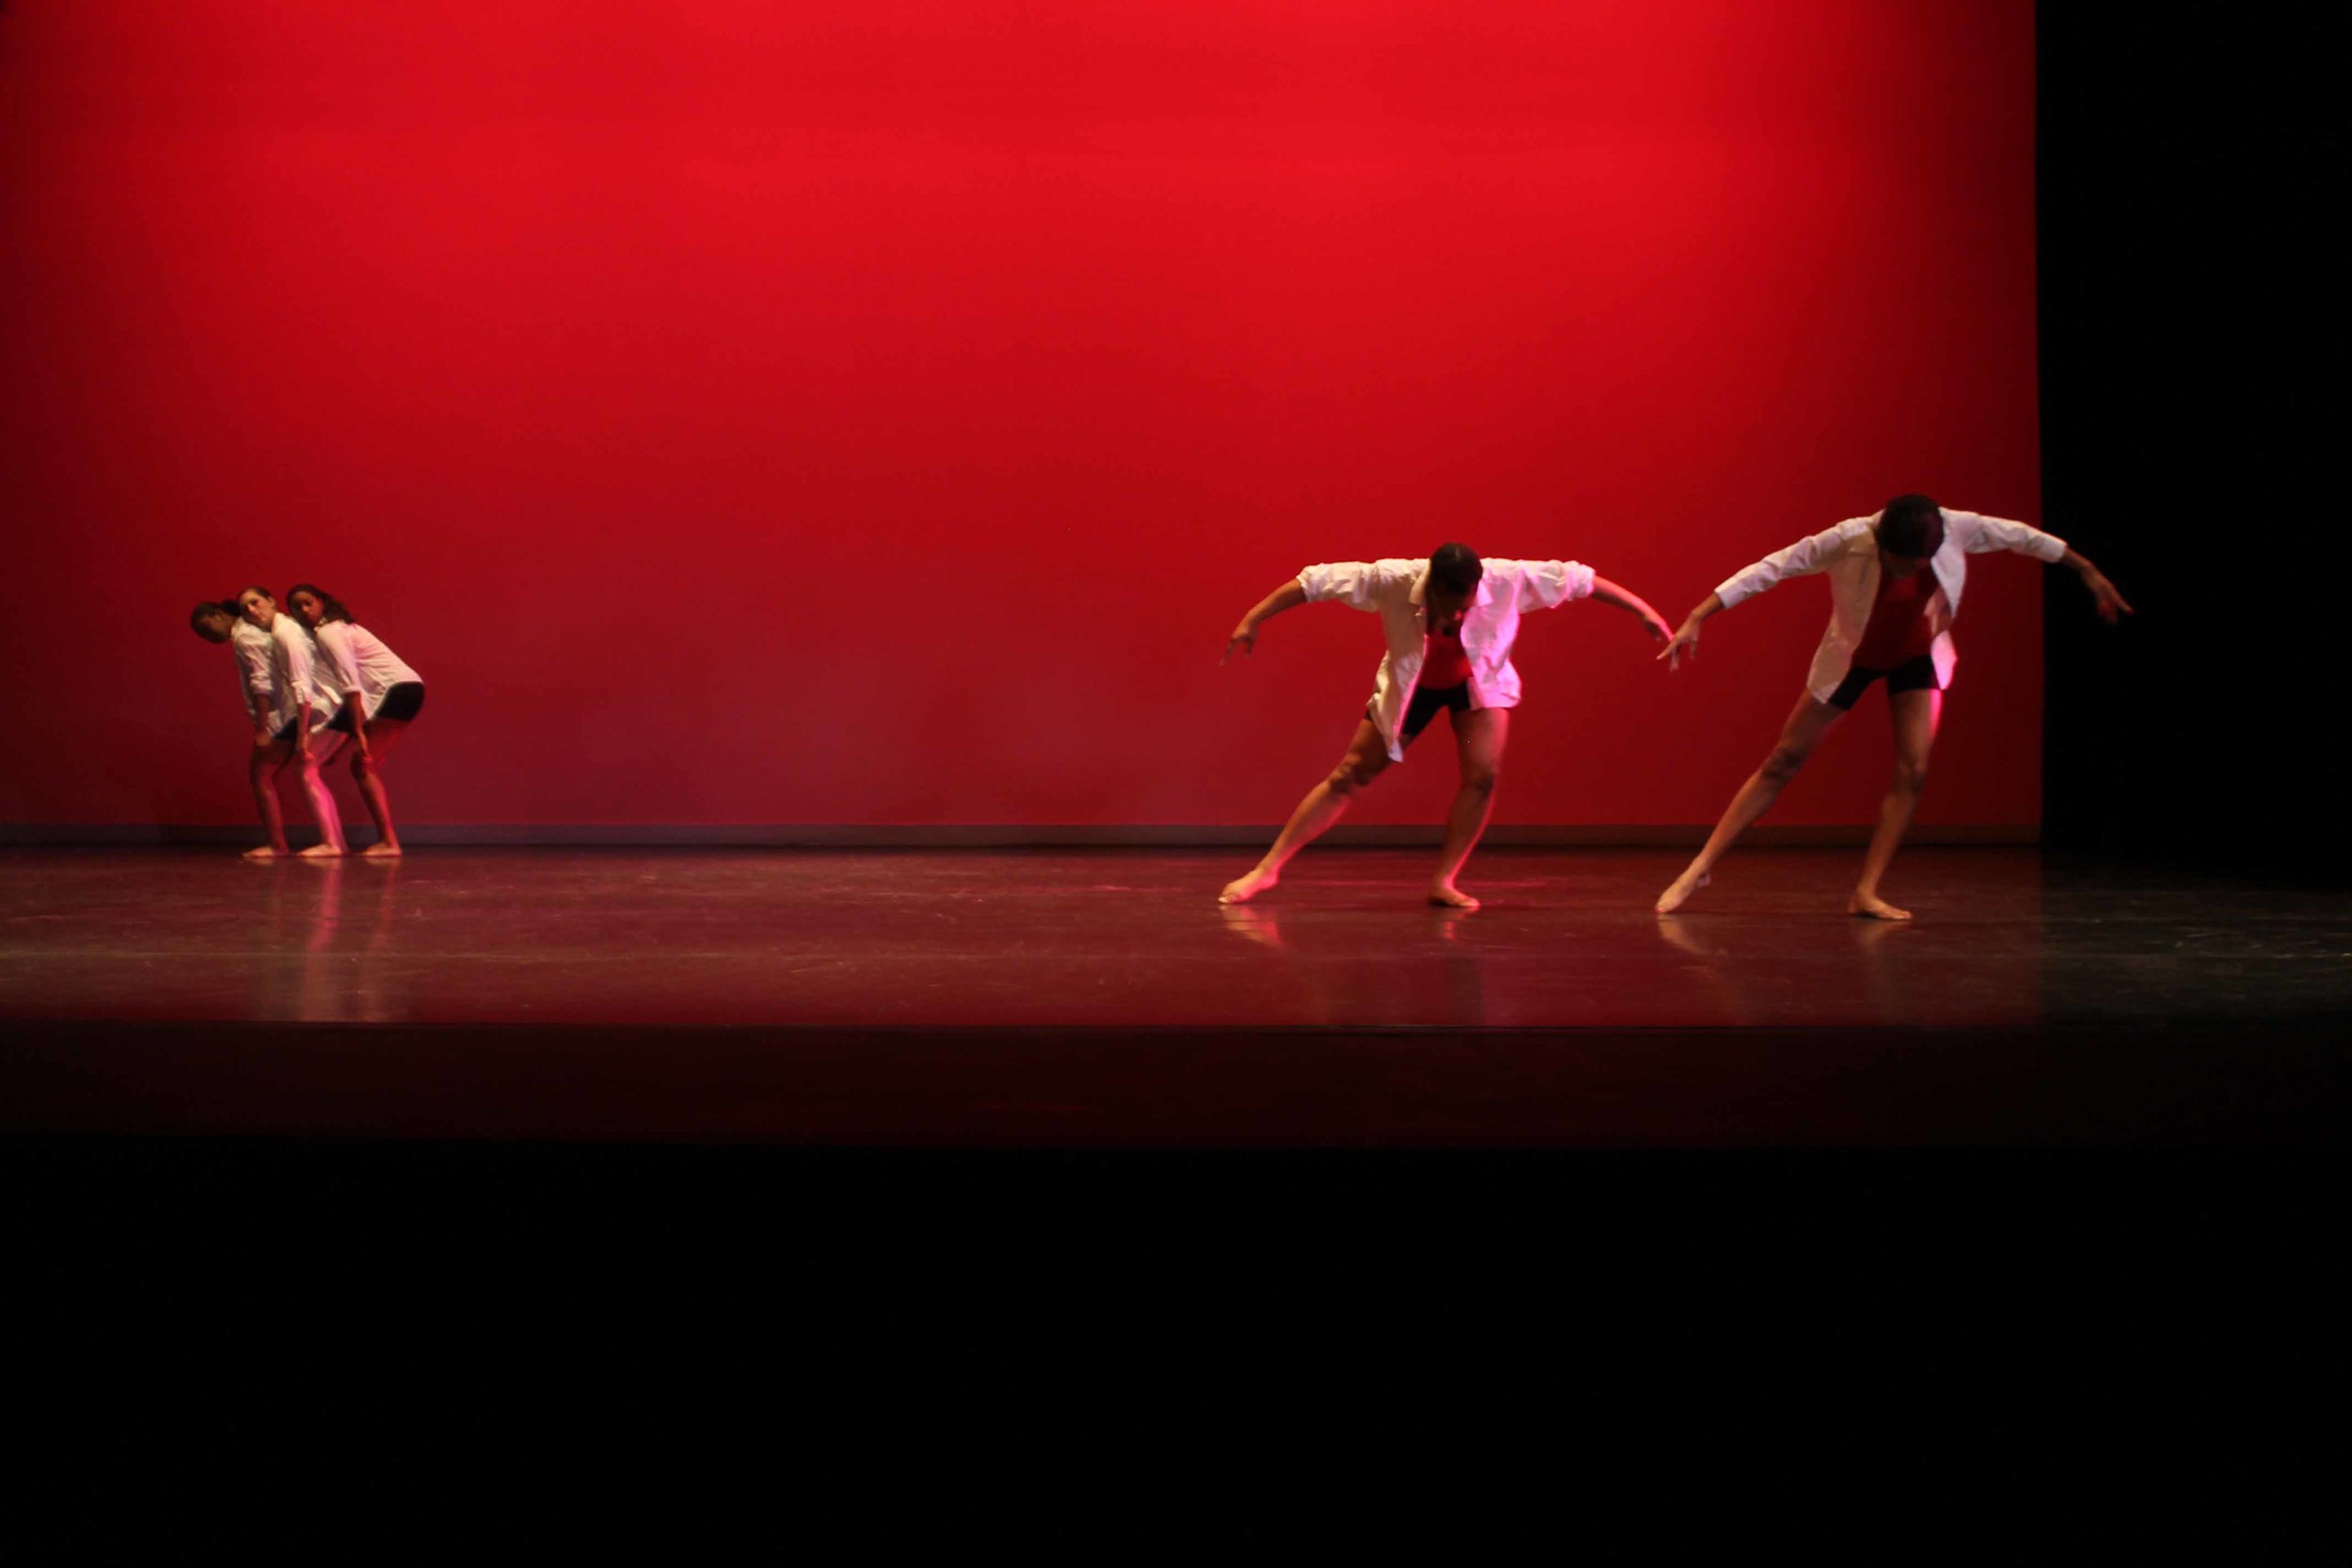   Student Choreograph Showcase 2014   Lighting Designer: Collin Lindgren  Photography: Cassandra Green 